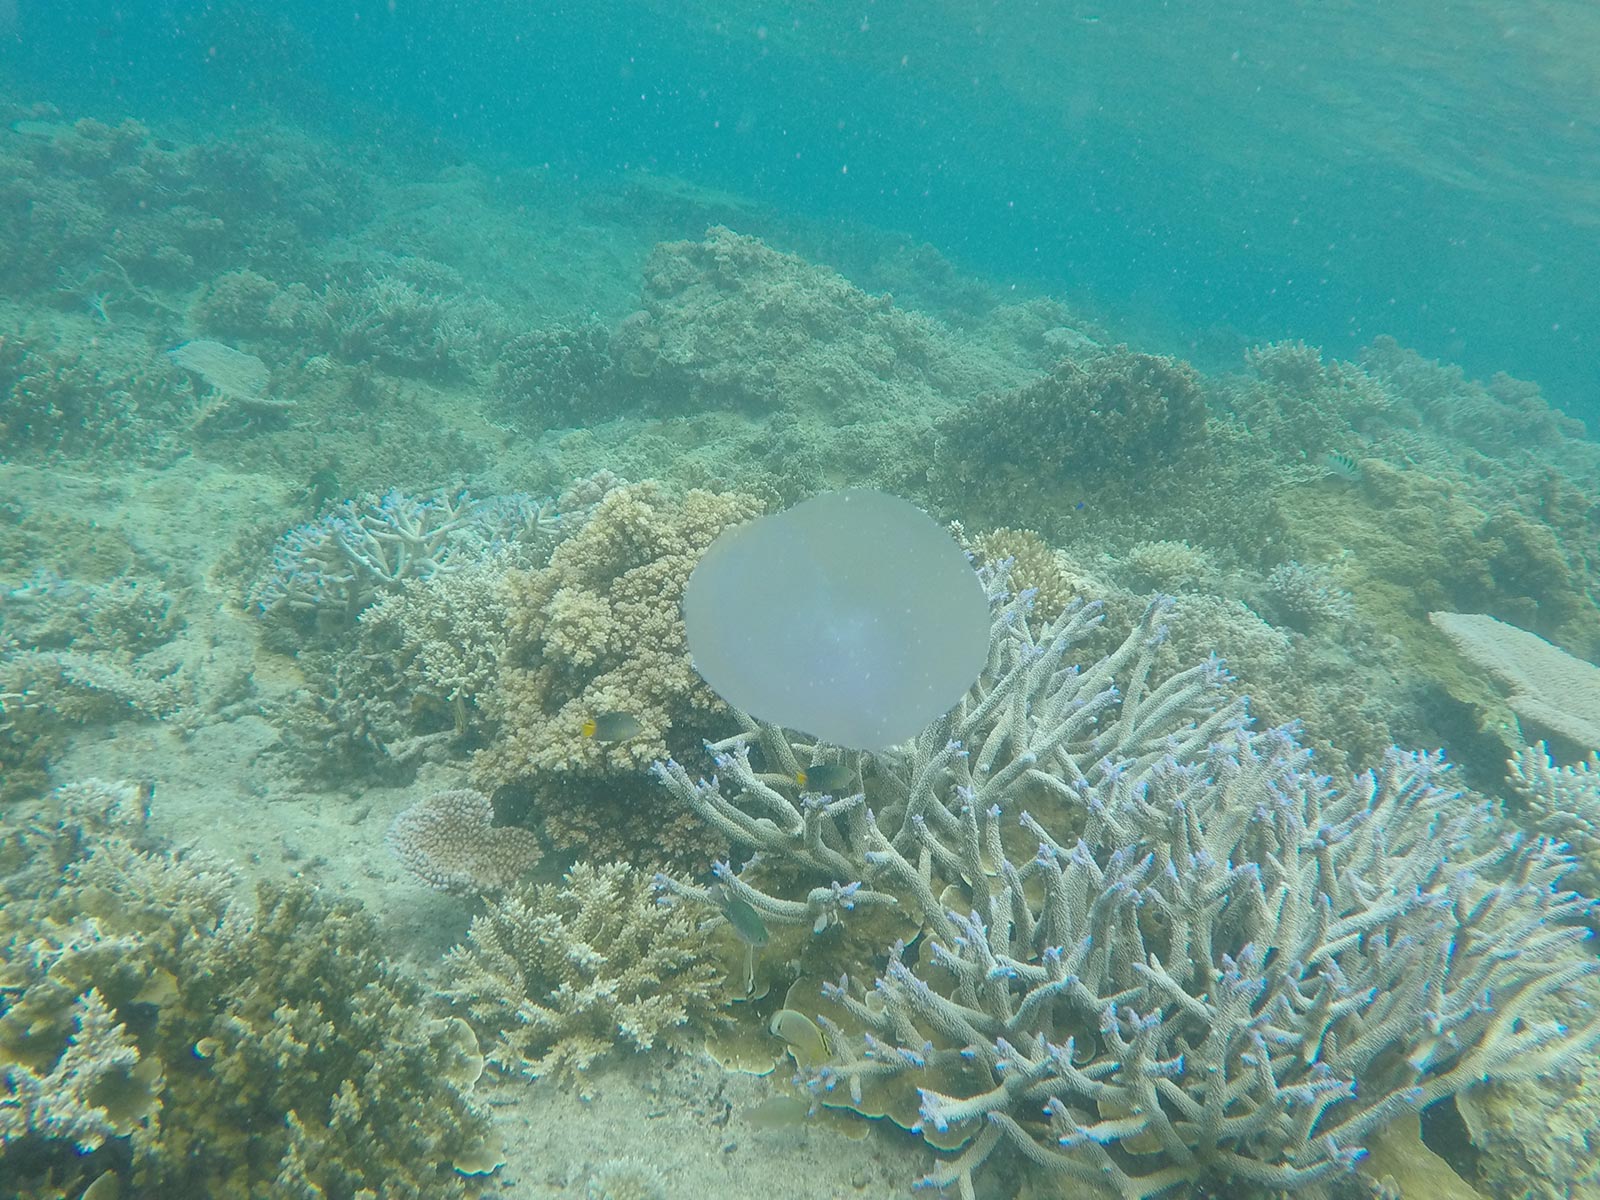 Coral reef underwater in Mantaray, Fiji. Bowls on Barefoot Manta